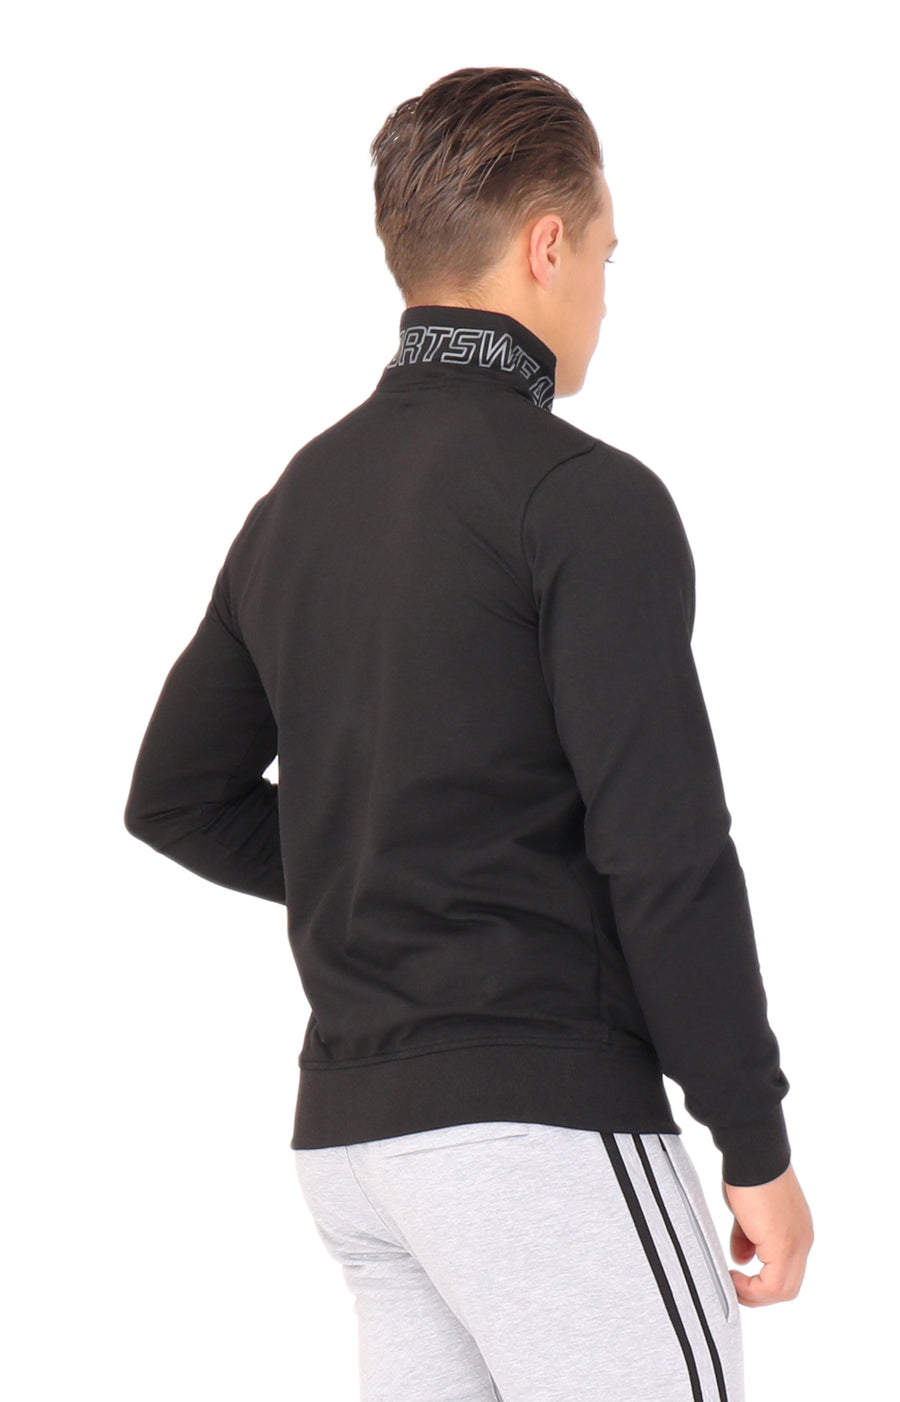 long sweatshirt: "Longline black sweatshirt with side slits